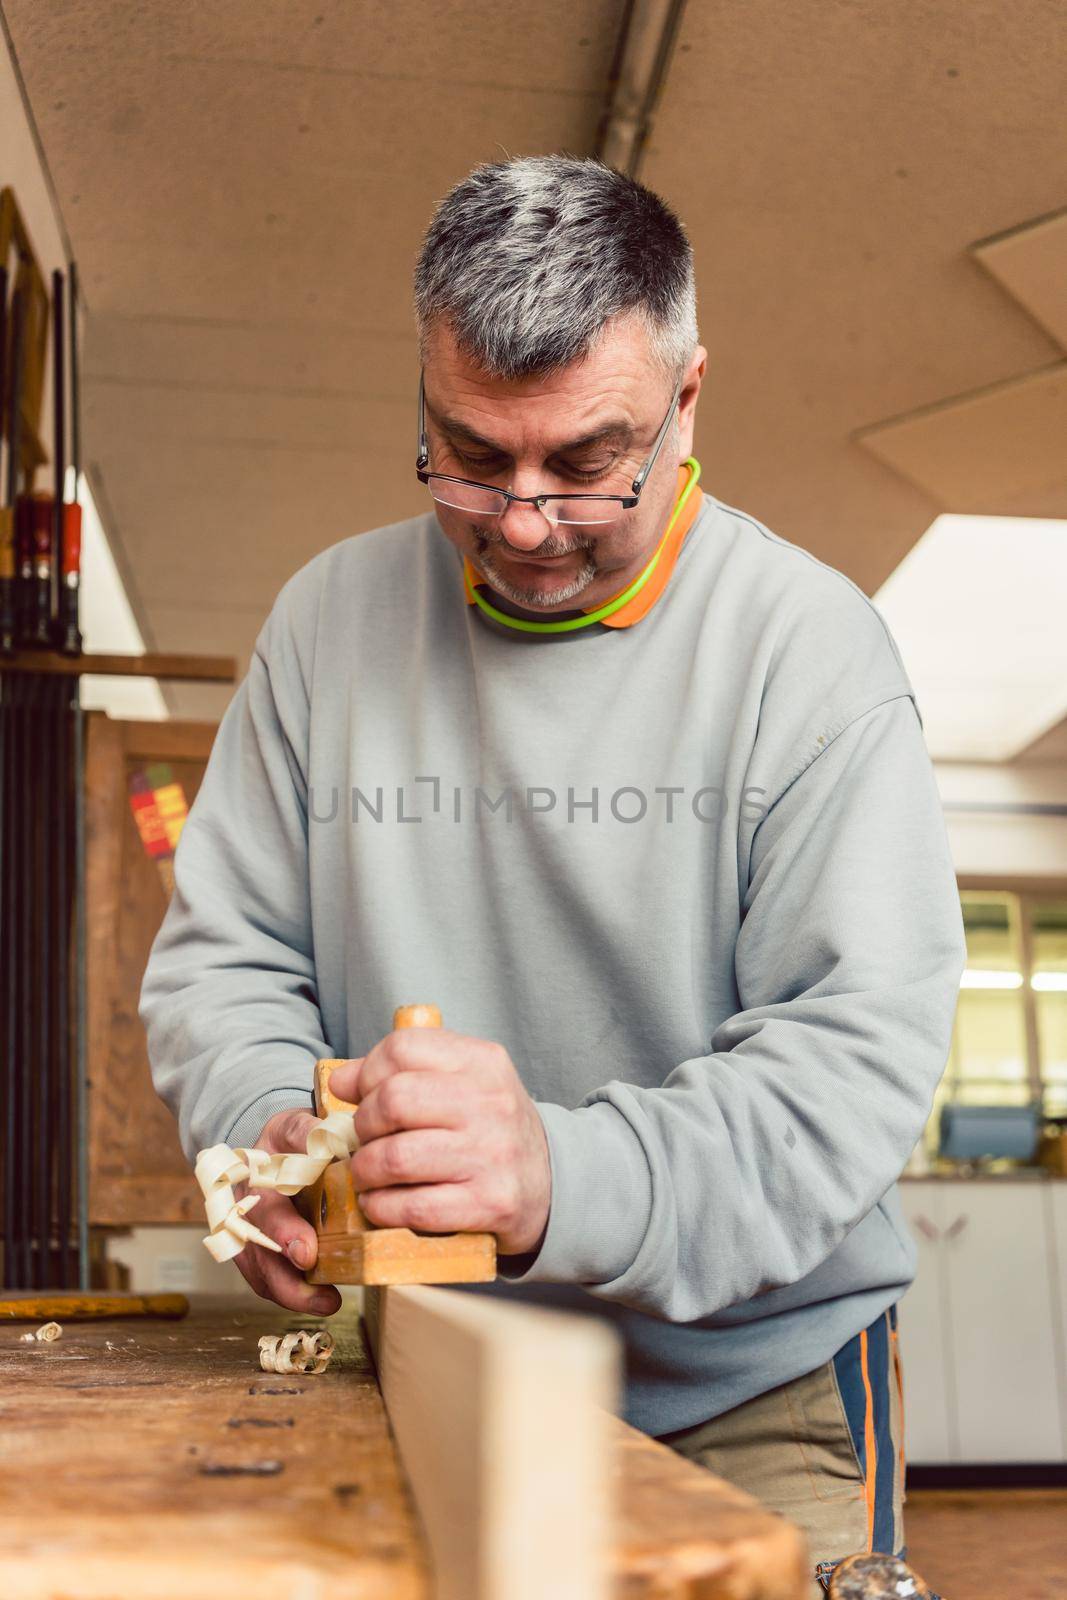 Experienced carpenter planing a board by Kzenon